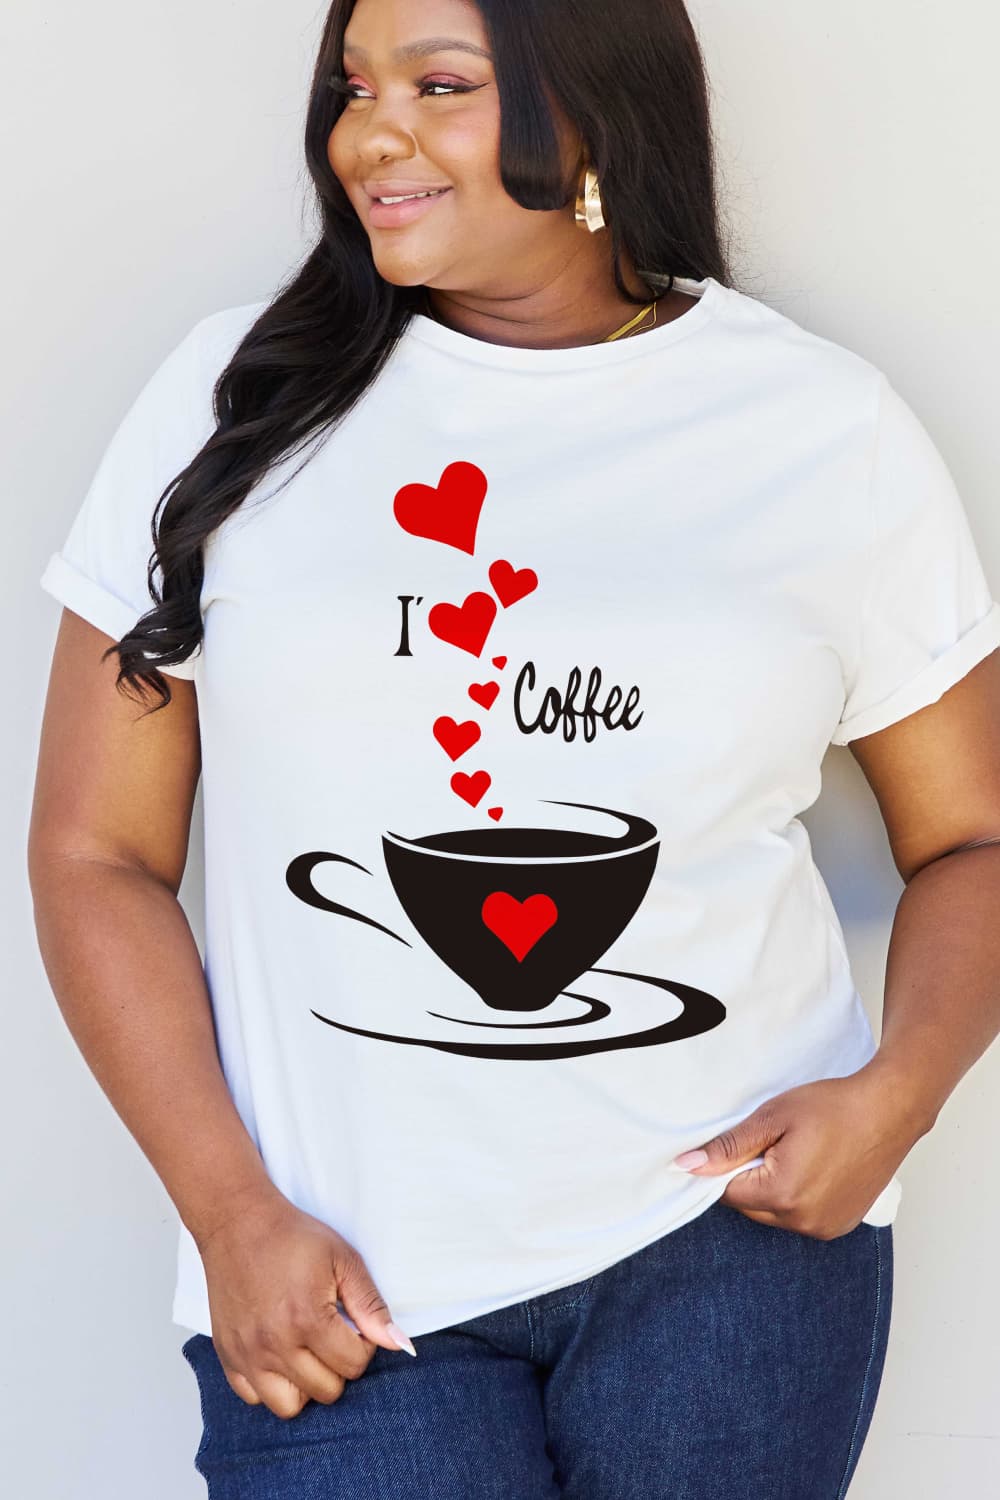 Simply Love I LOVE COFFEE Graphic Cotton Tee